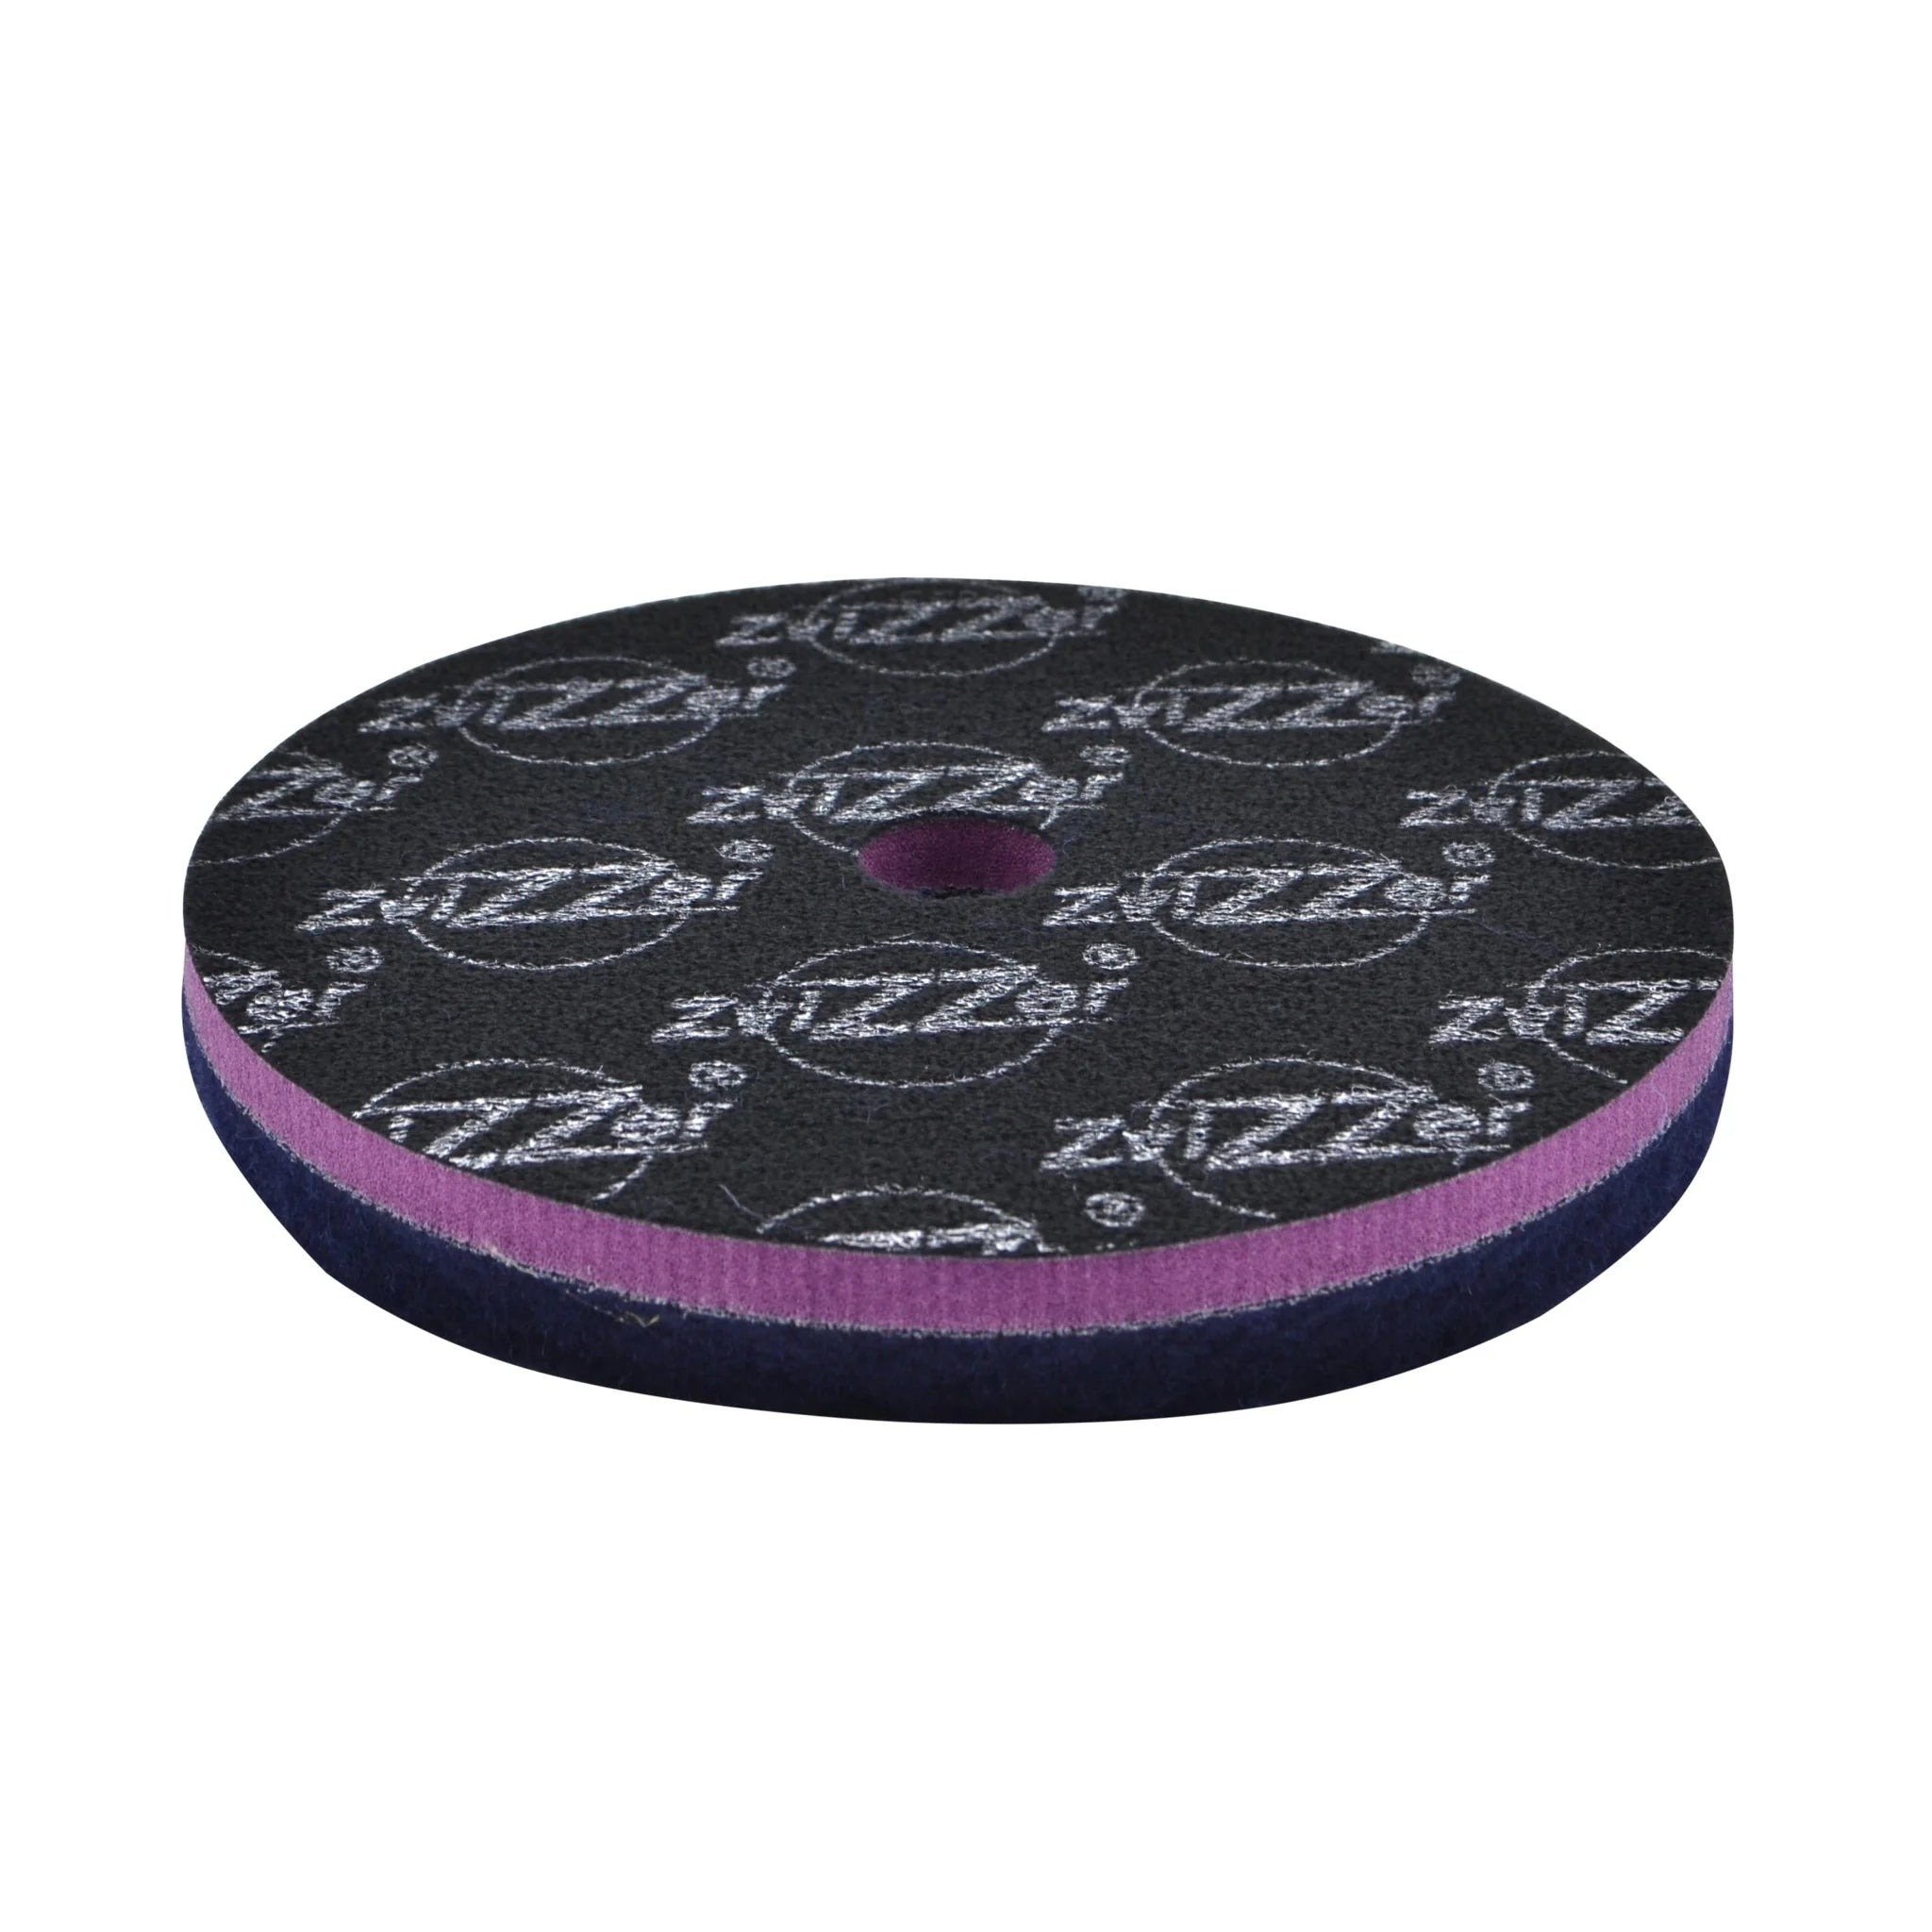 Zvizzer Doddle Wool Pad Black - Single (Various Sizes)